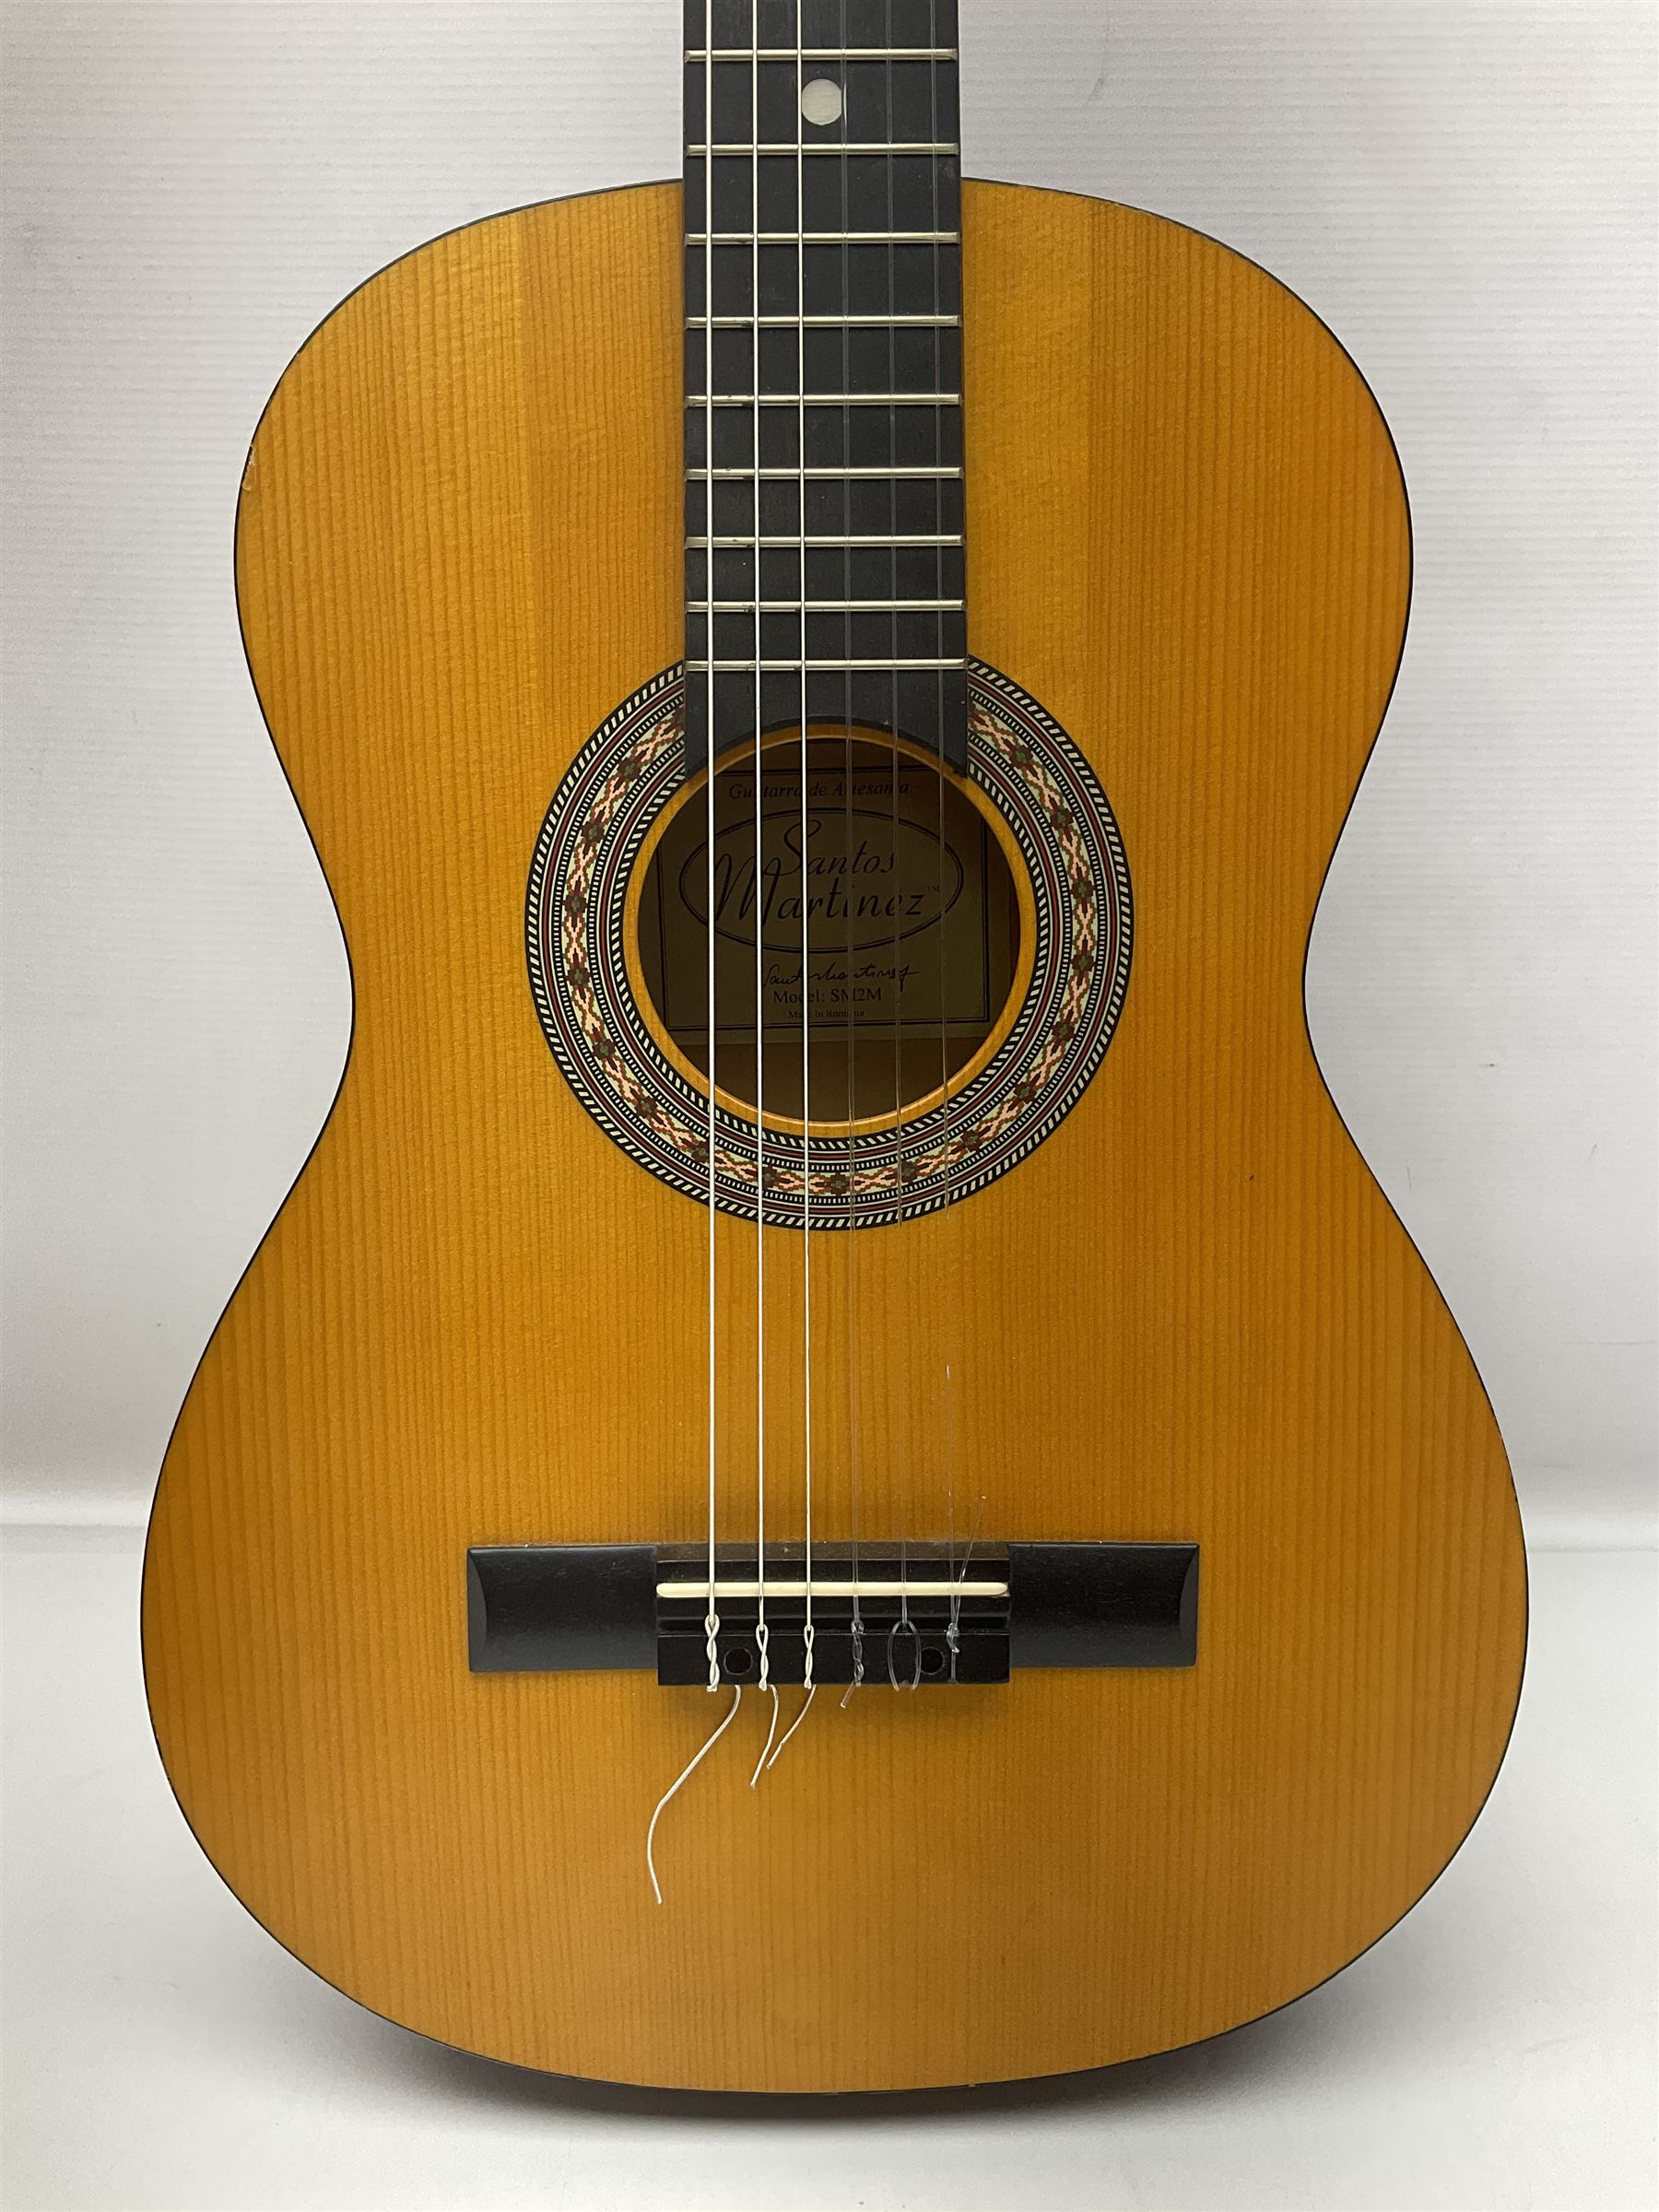 Romanian Santos Martinez three-quarter/child size classical guitar - Image 2 of 14